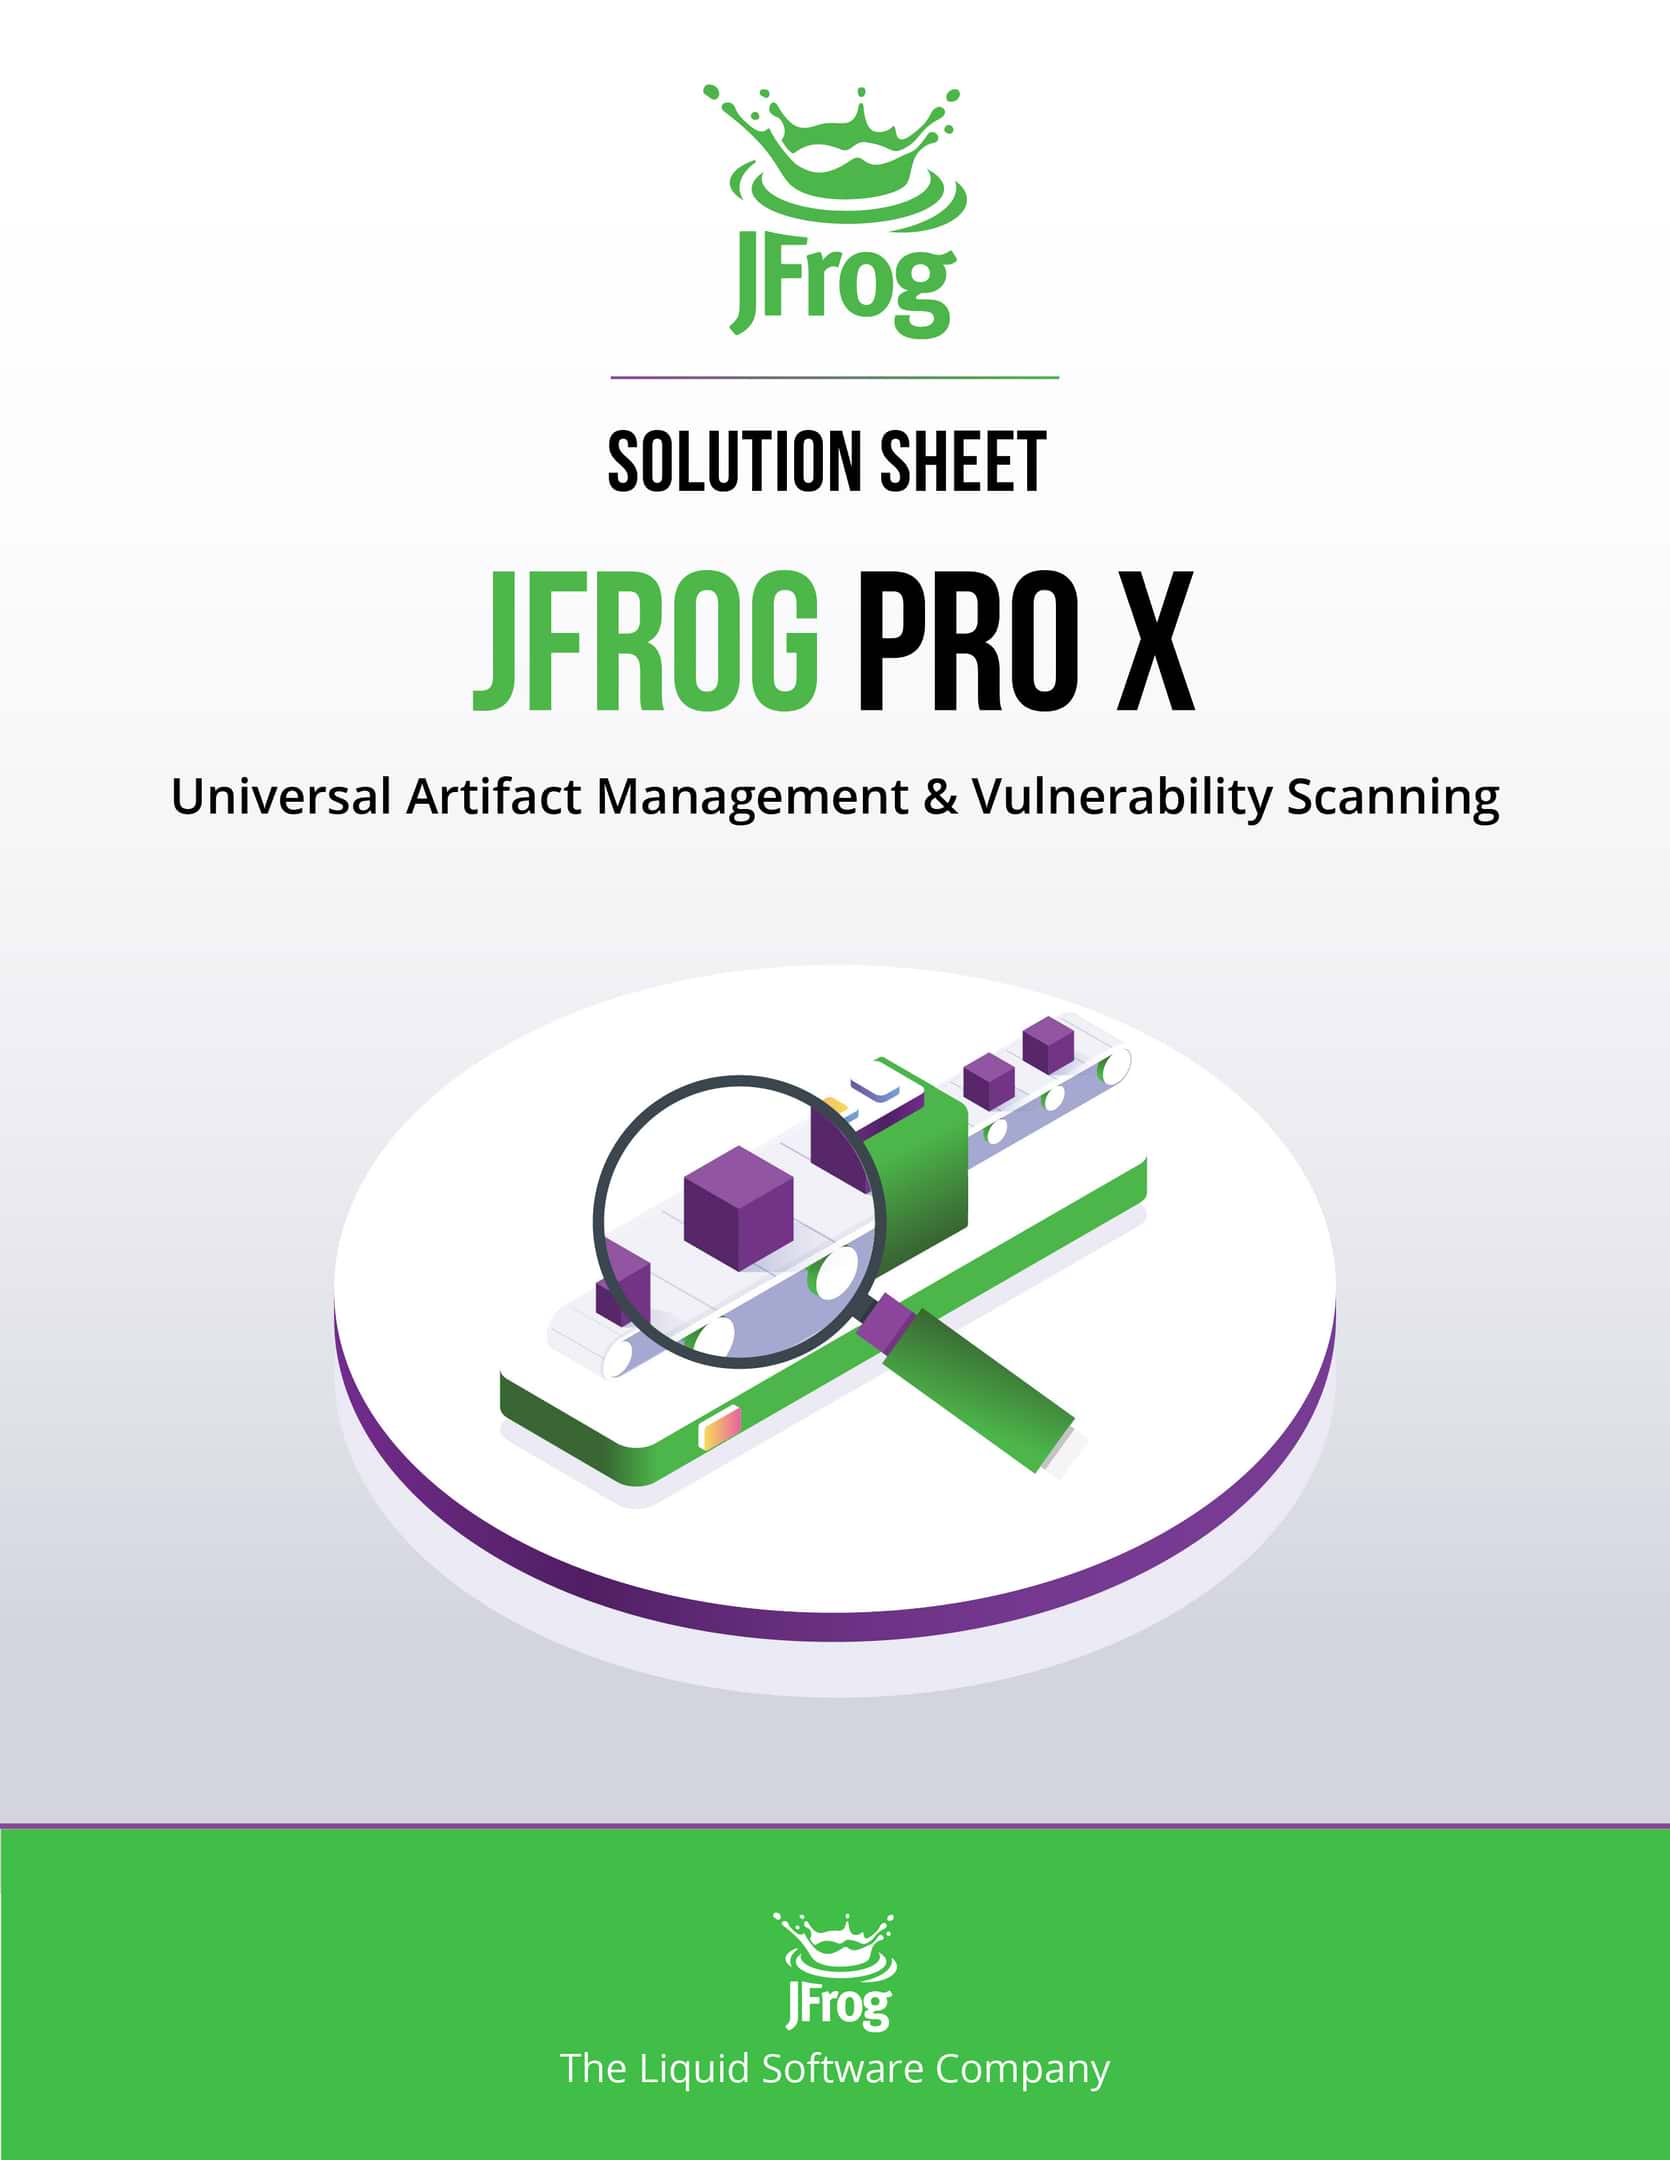 JFrog Pro X Solution Sheet